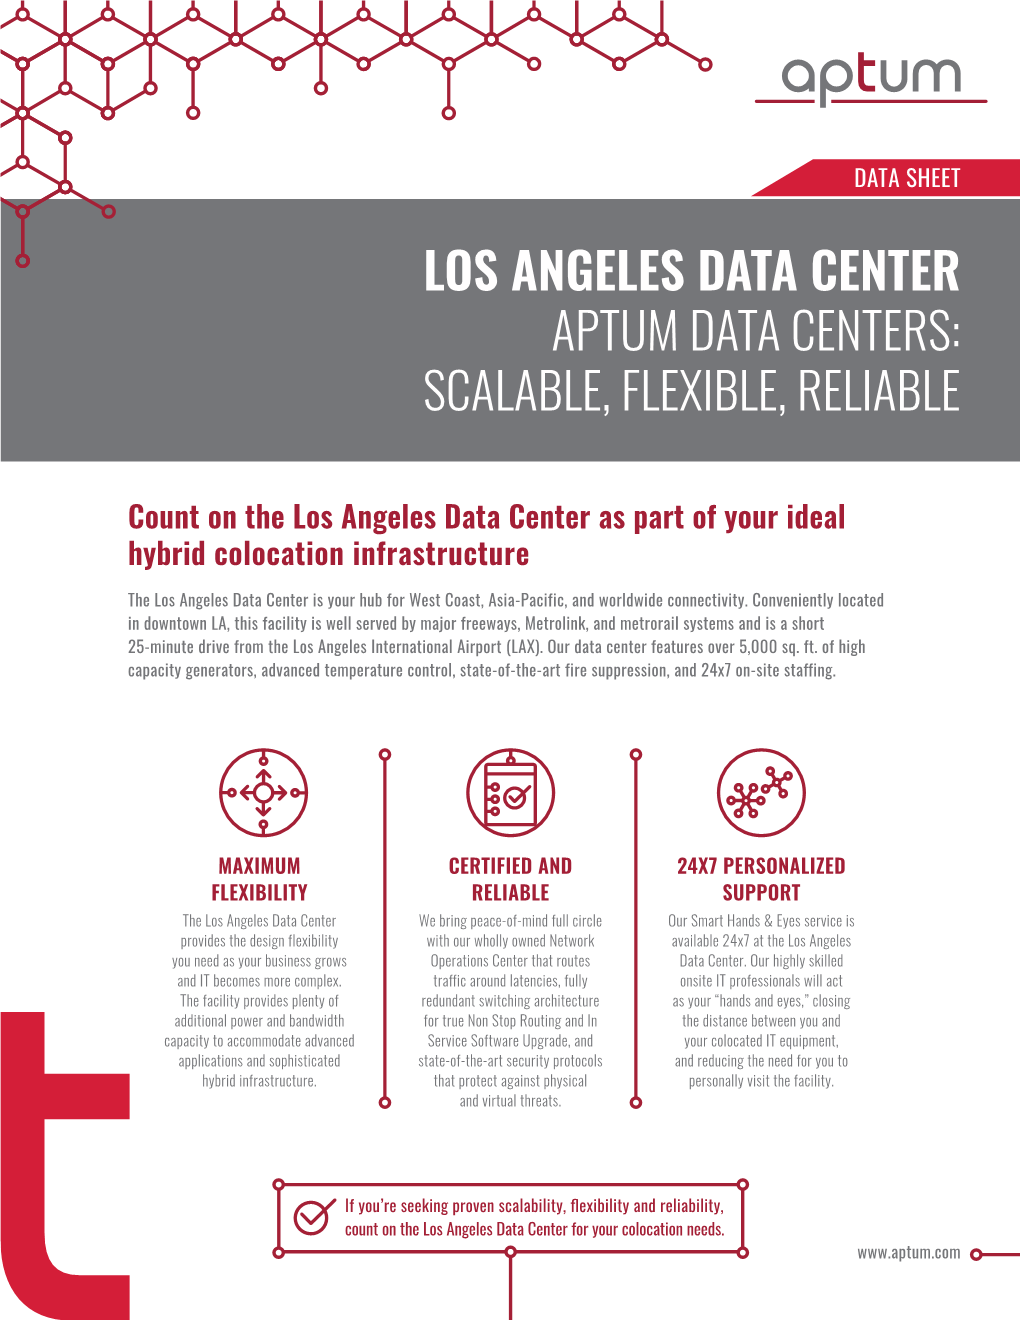 Los Angeles Data Center Aptum Data Centers: Scalable, Flexible, Reliable